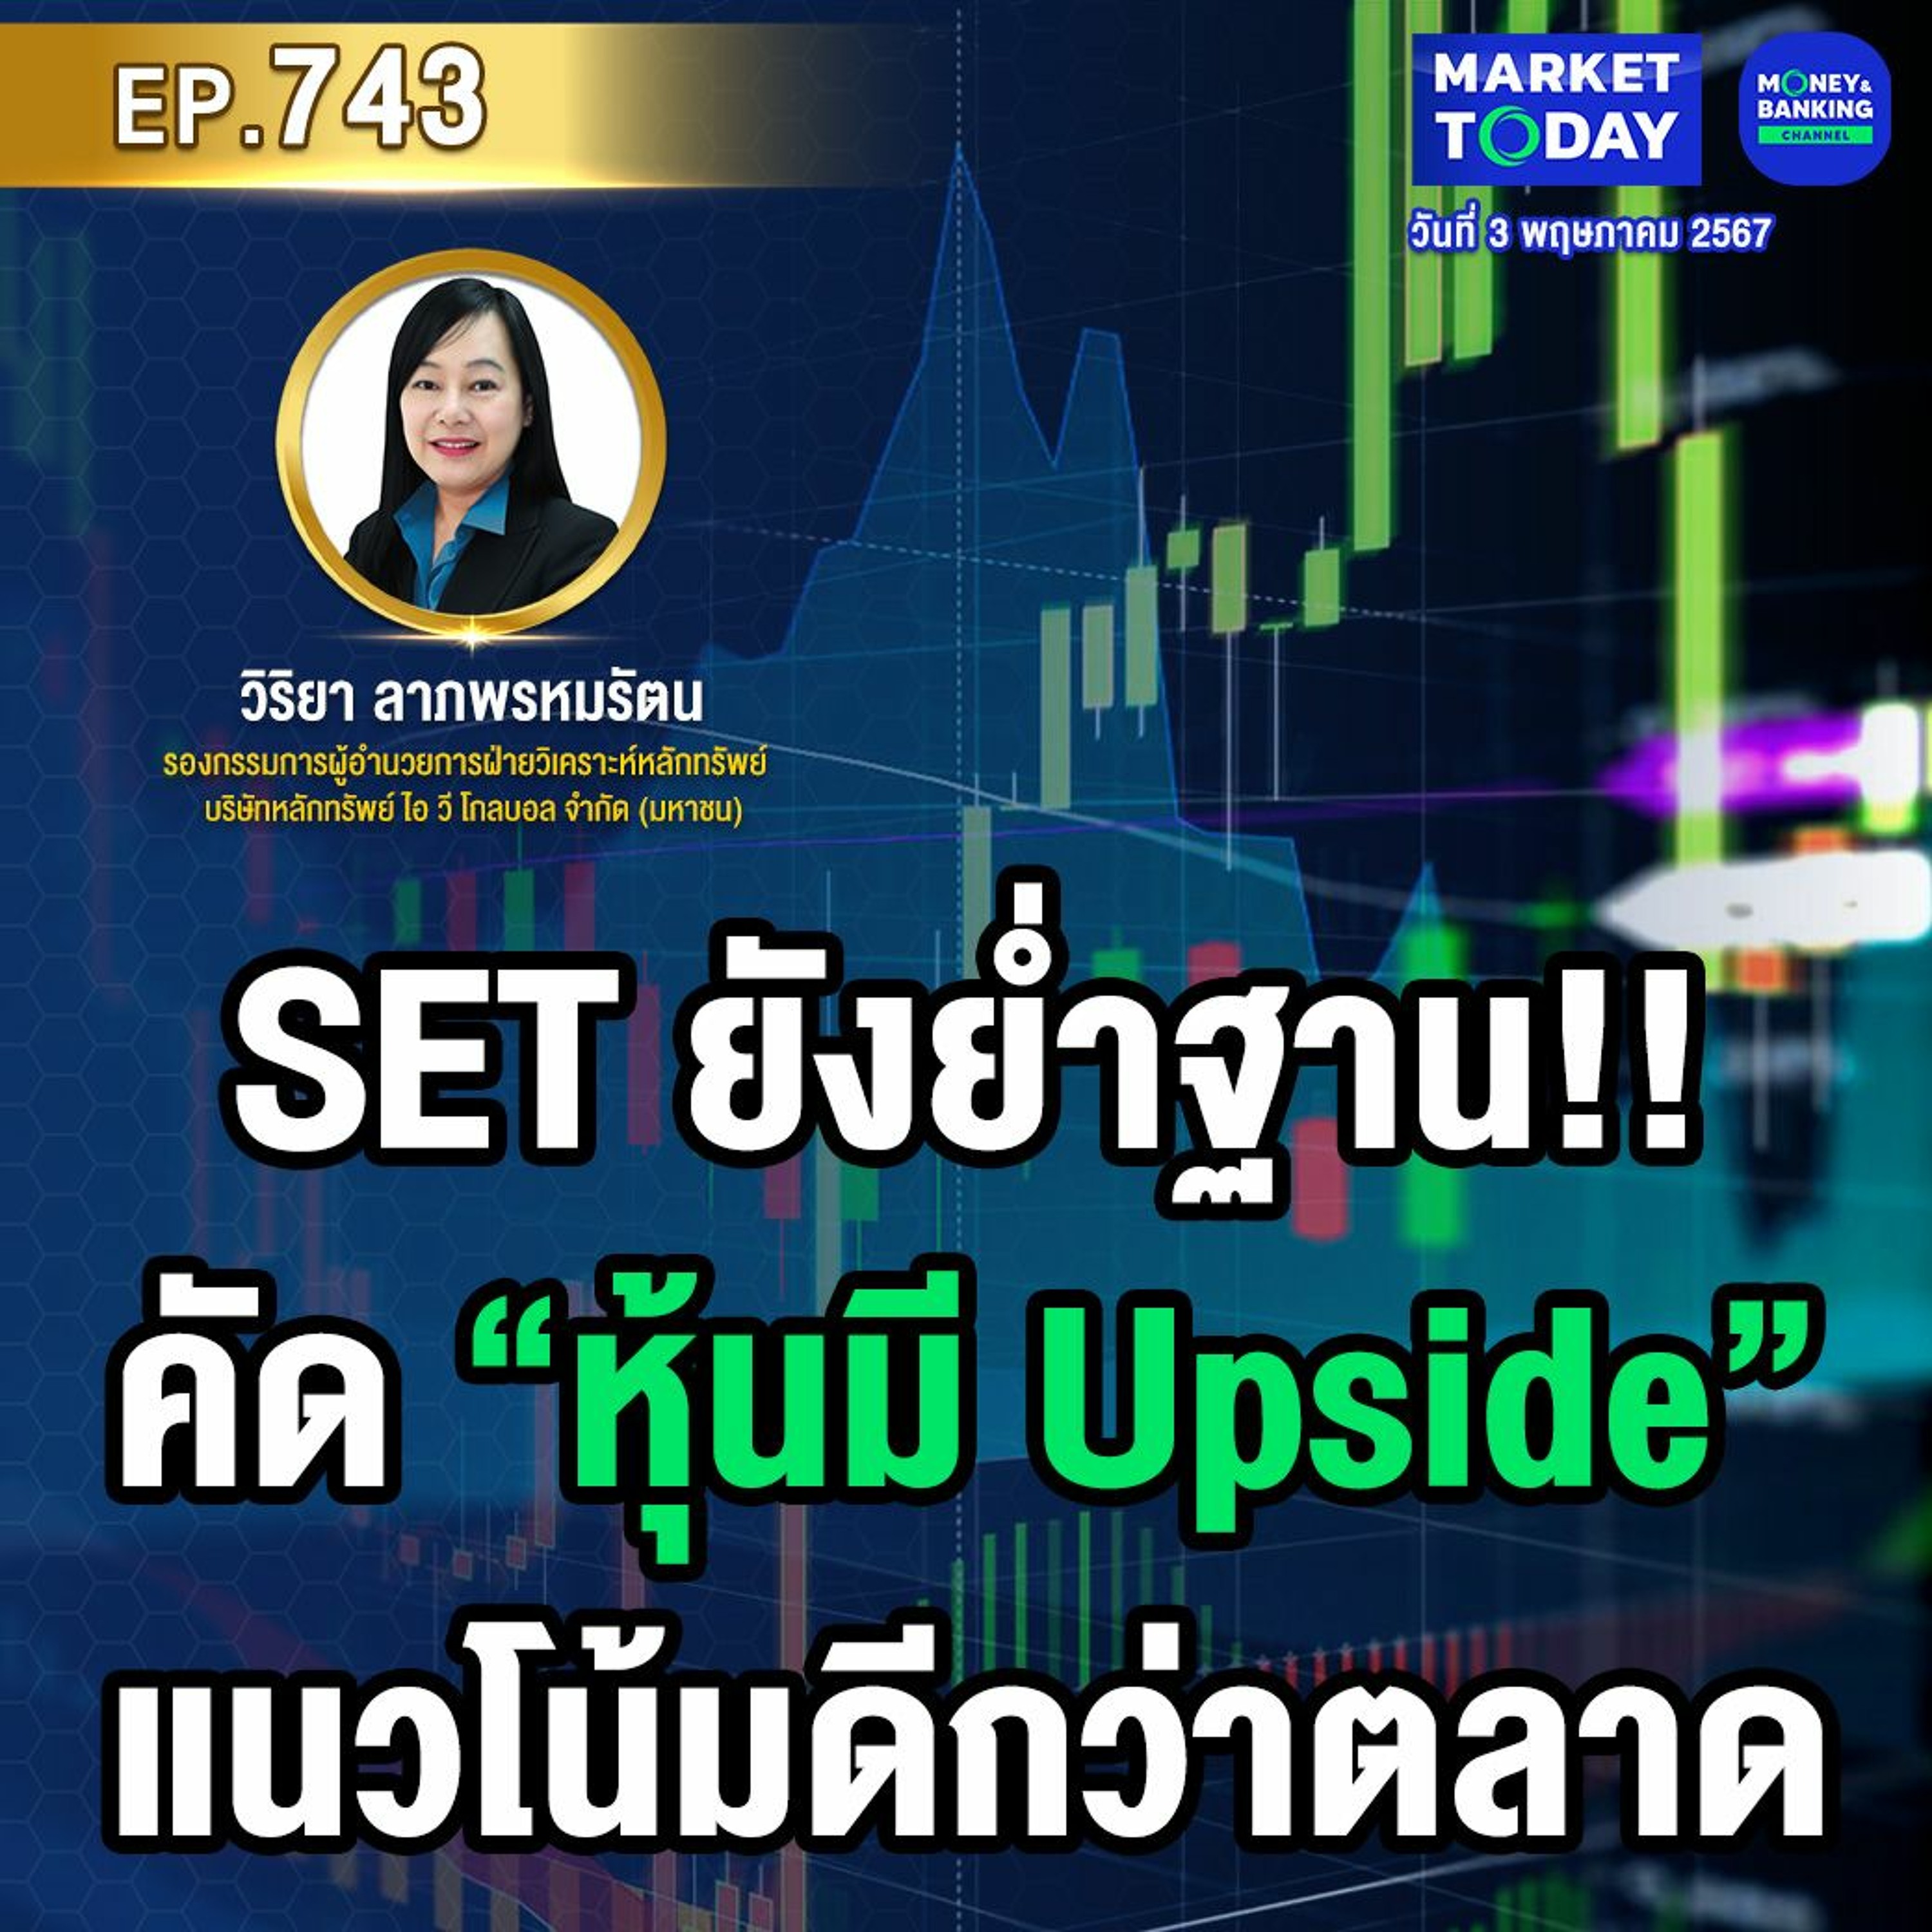 Market Today EP.743 | SET ยังย่ำฐาน! คัด “หุ้นมี Upside” แนวโน้มดีกว่าตลาด